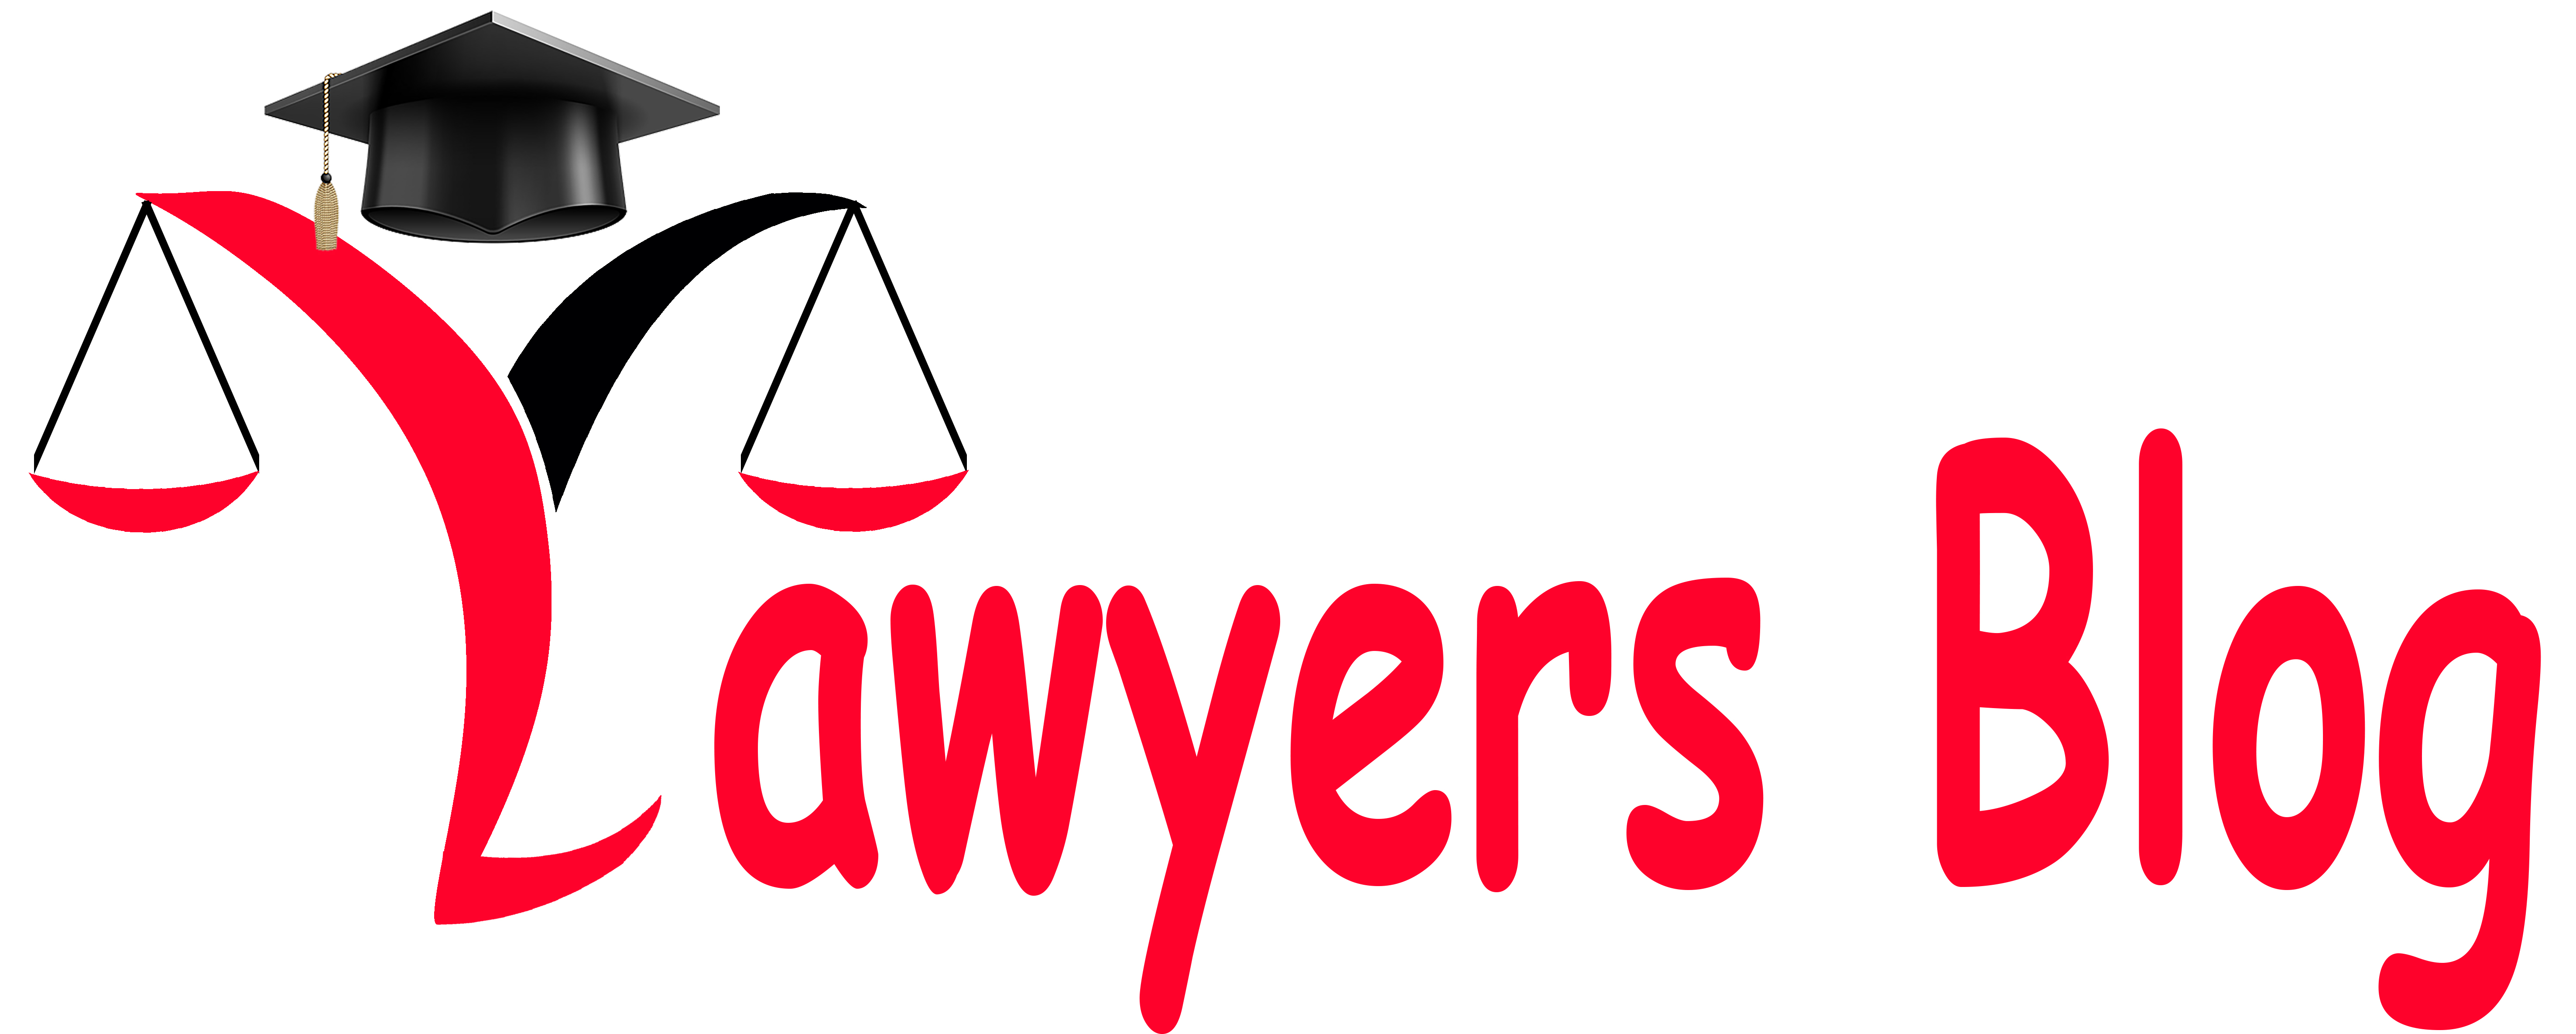 Lawyers